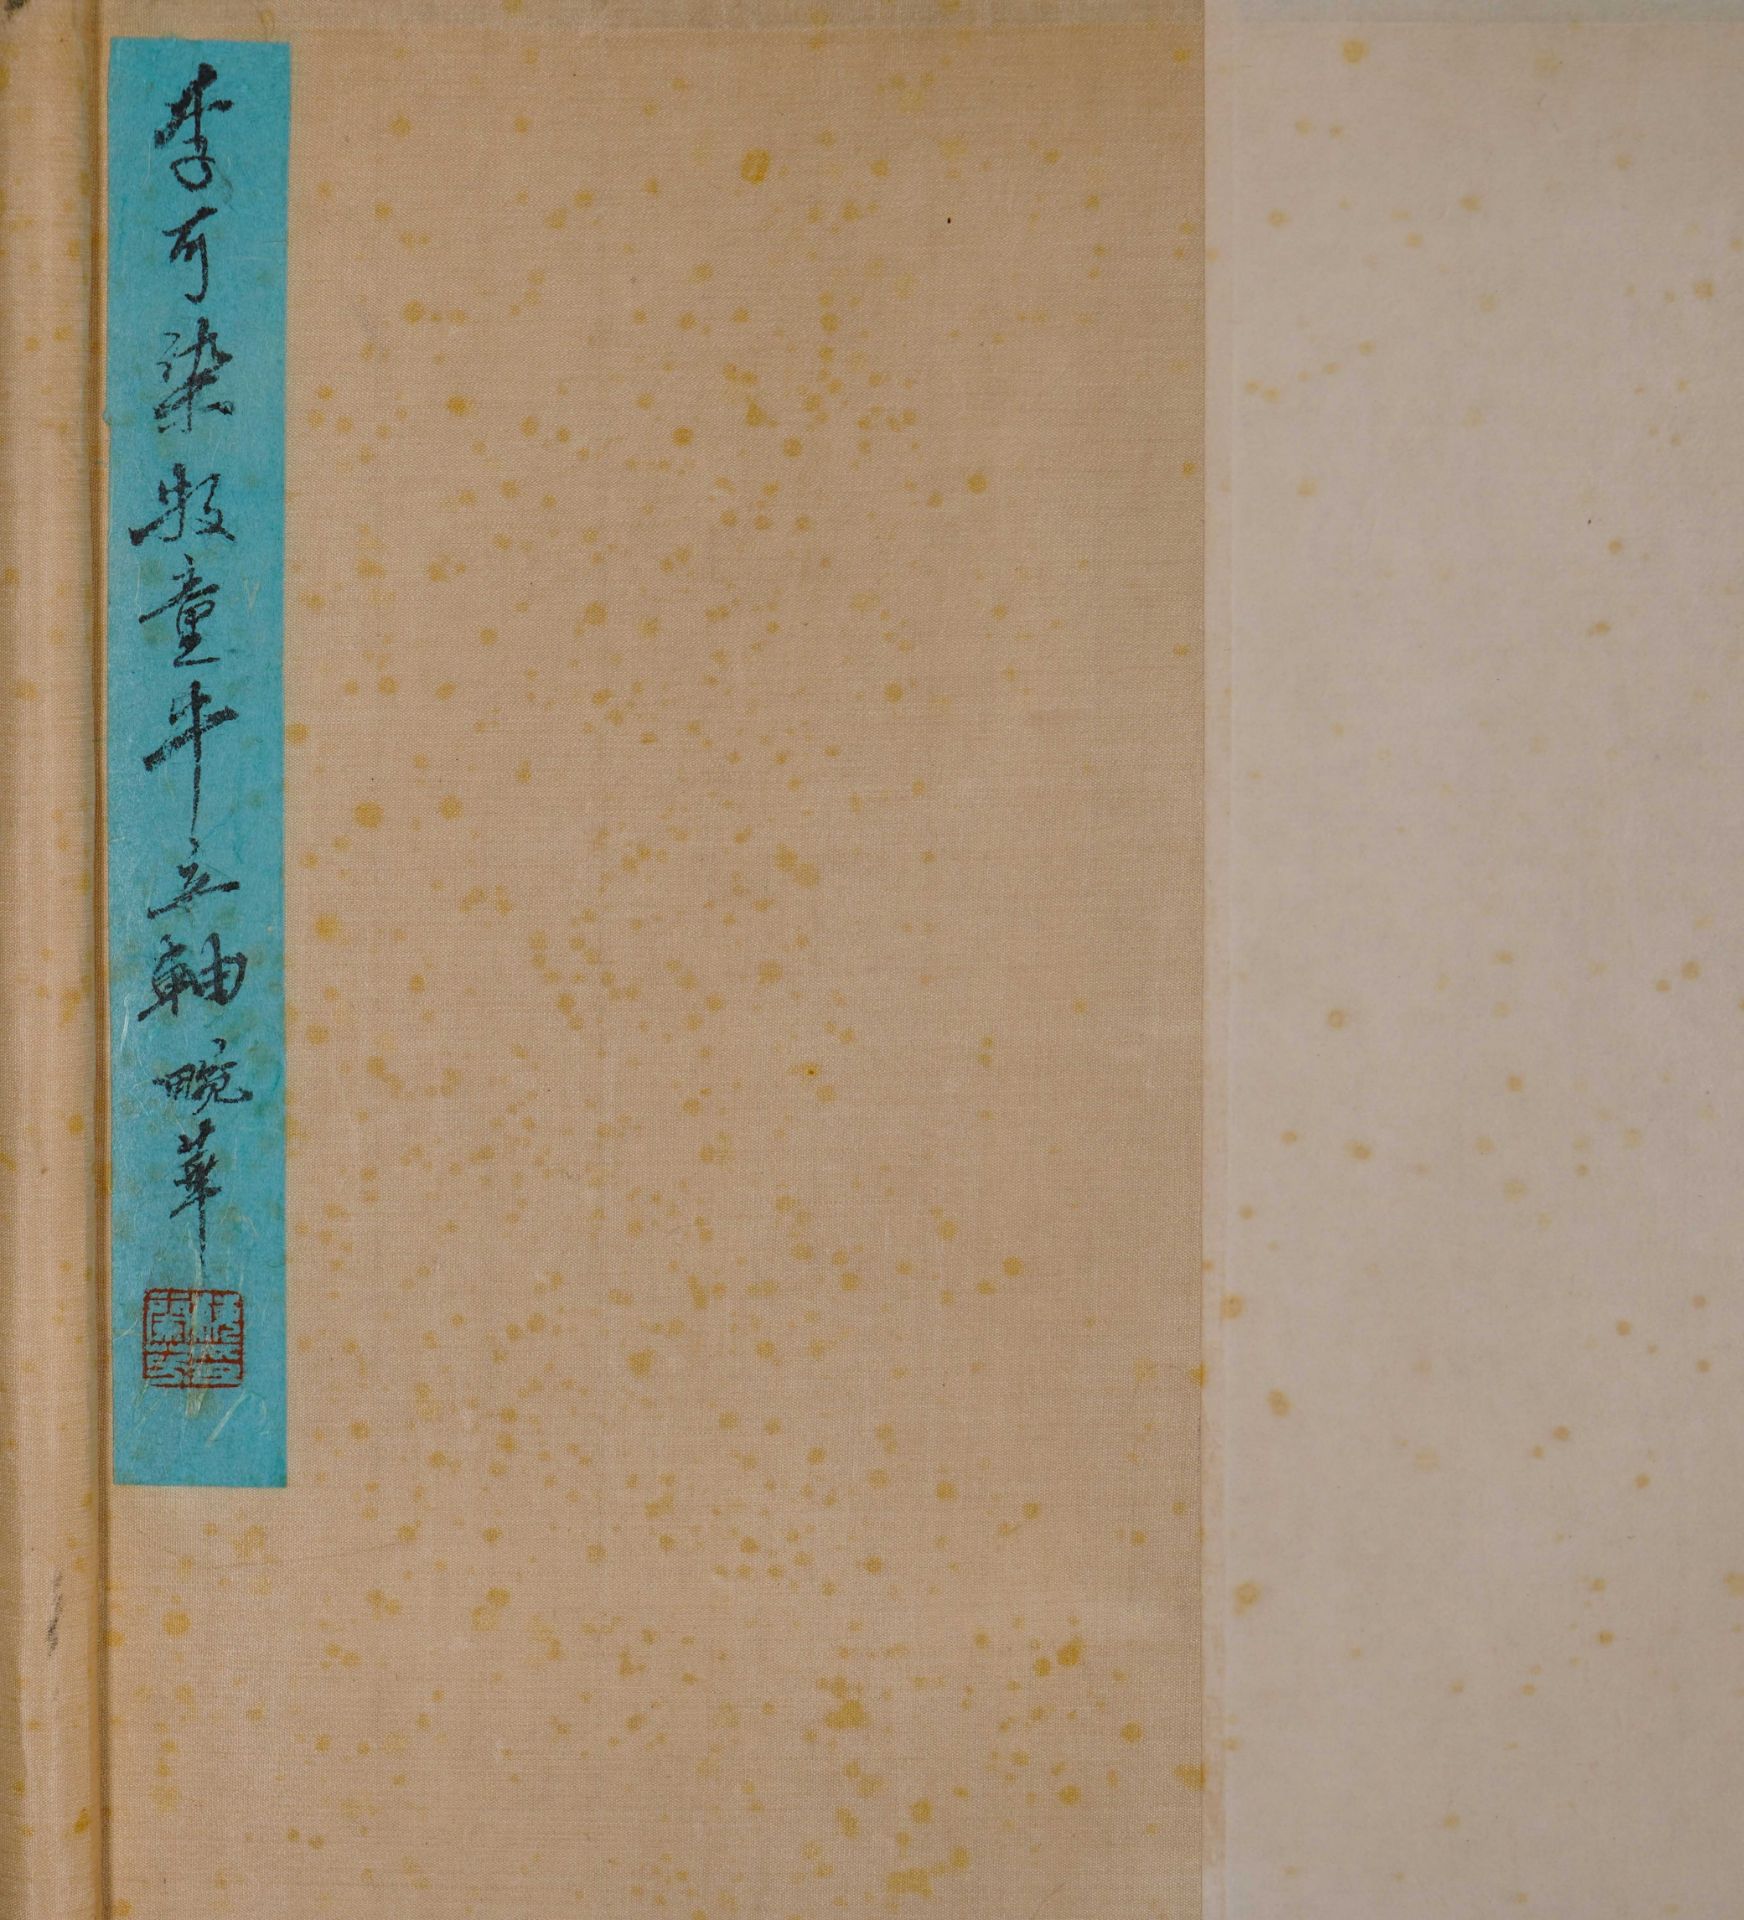 A Chinese Scroll Painting by Li Keran - Image 8 of 8